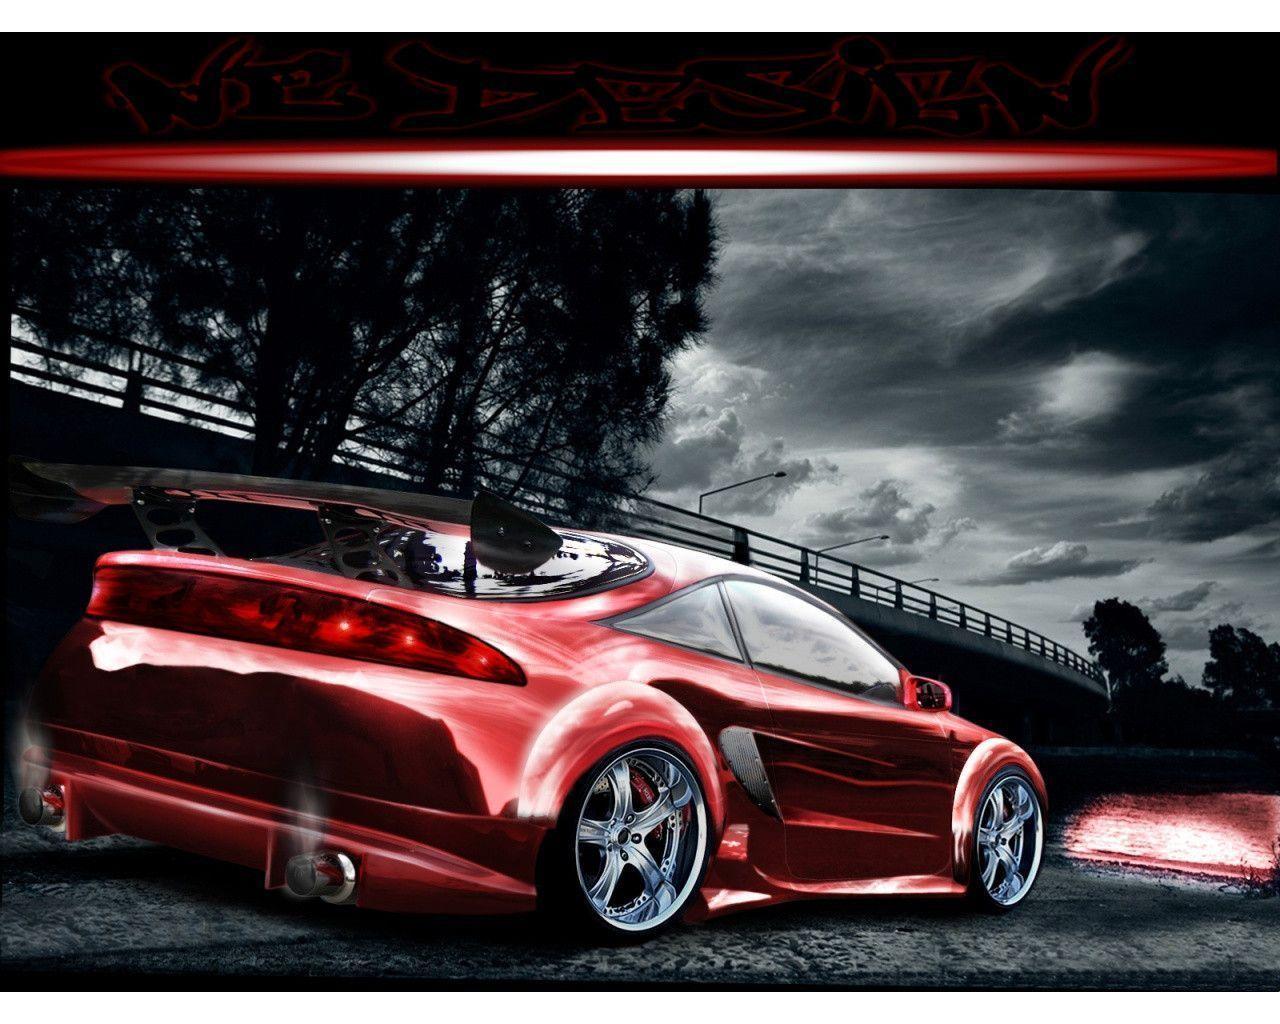 image For > Mitsubishi Eclipse Wallpaper